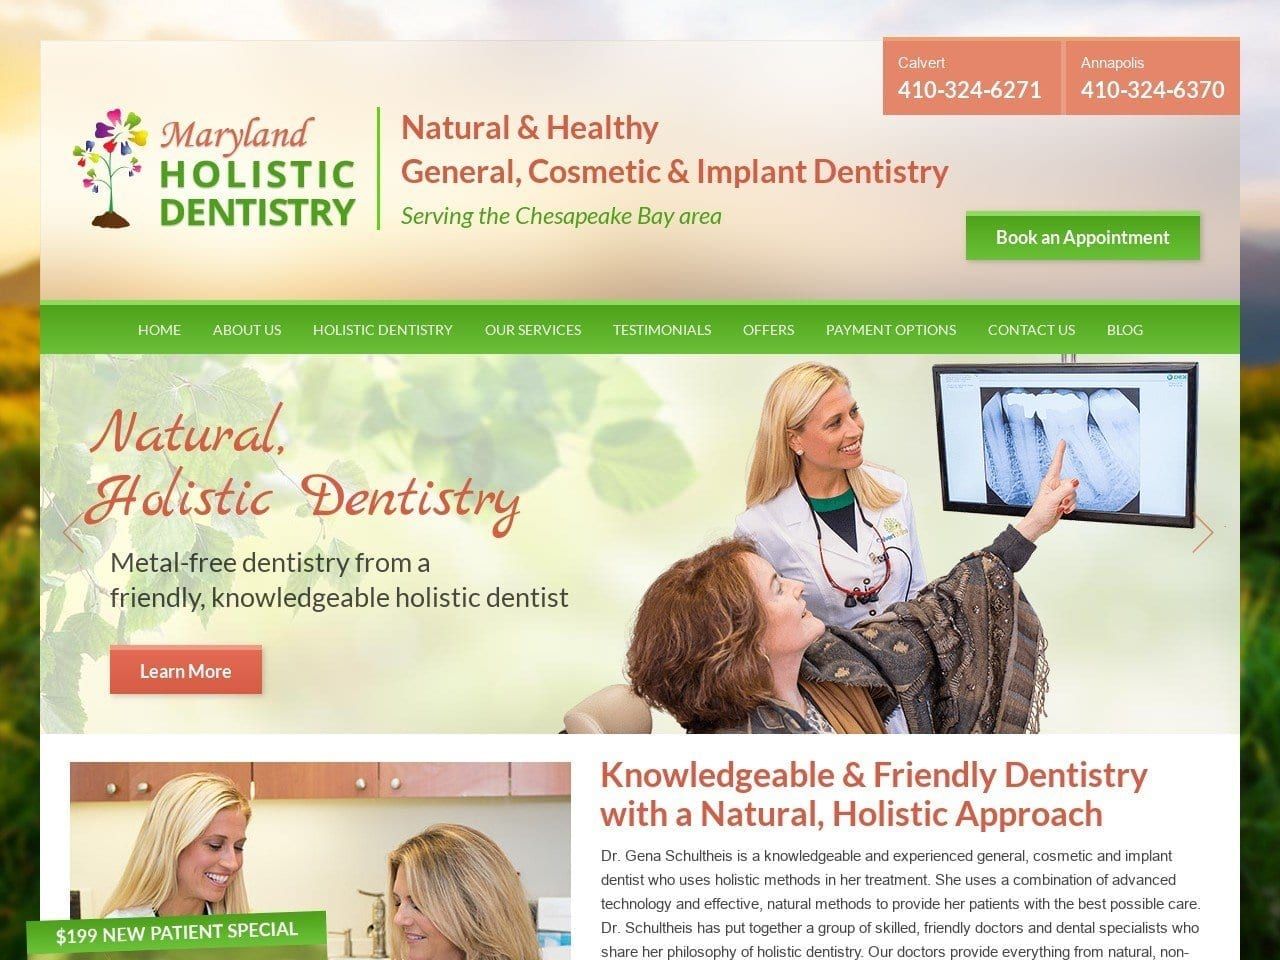 Annapolis Green Dental LLC Website Screenshot from annapolisgreendental.com